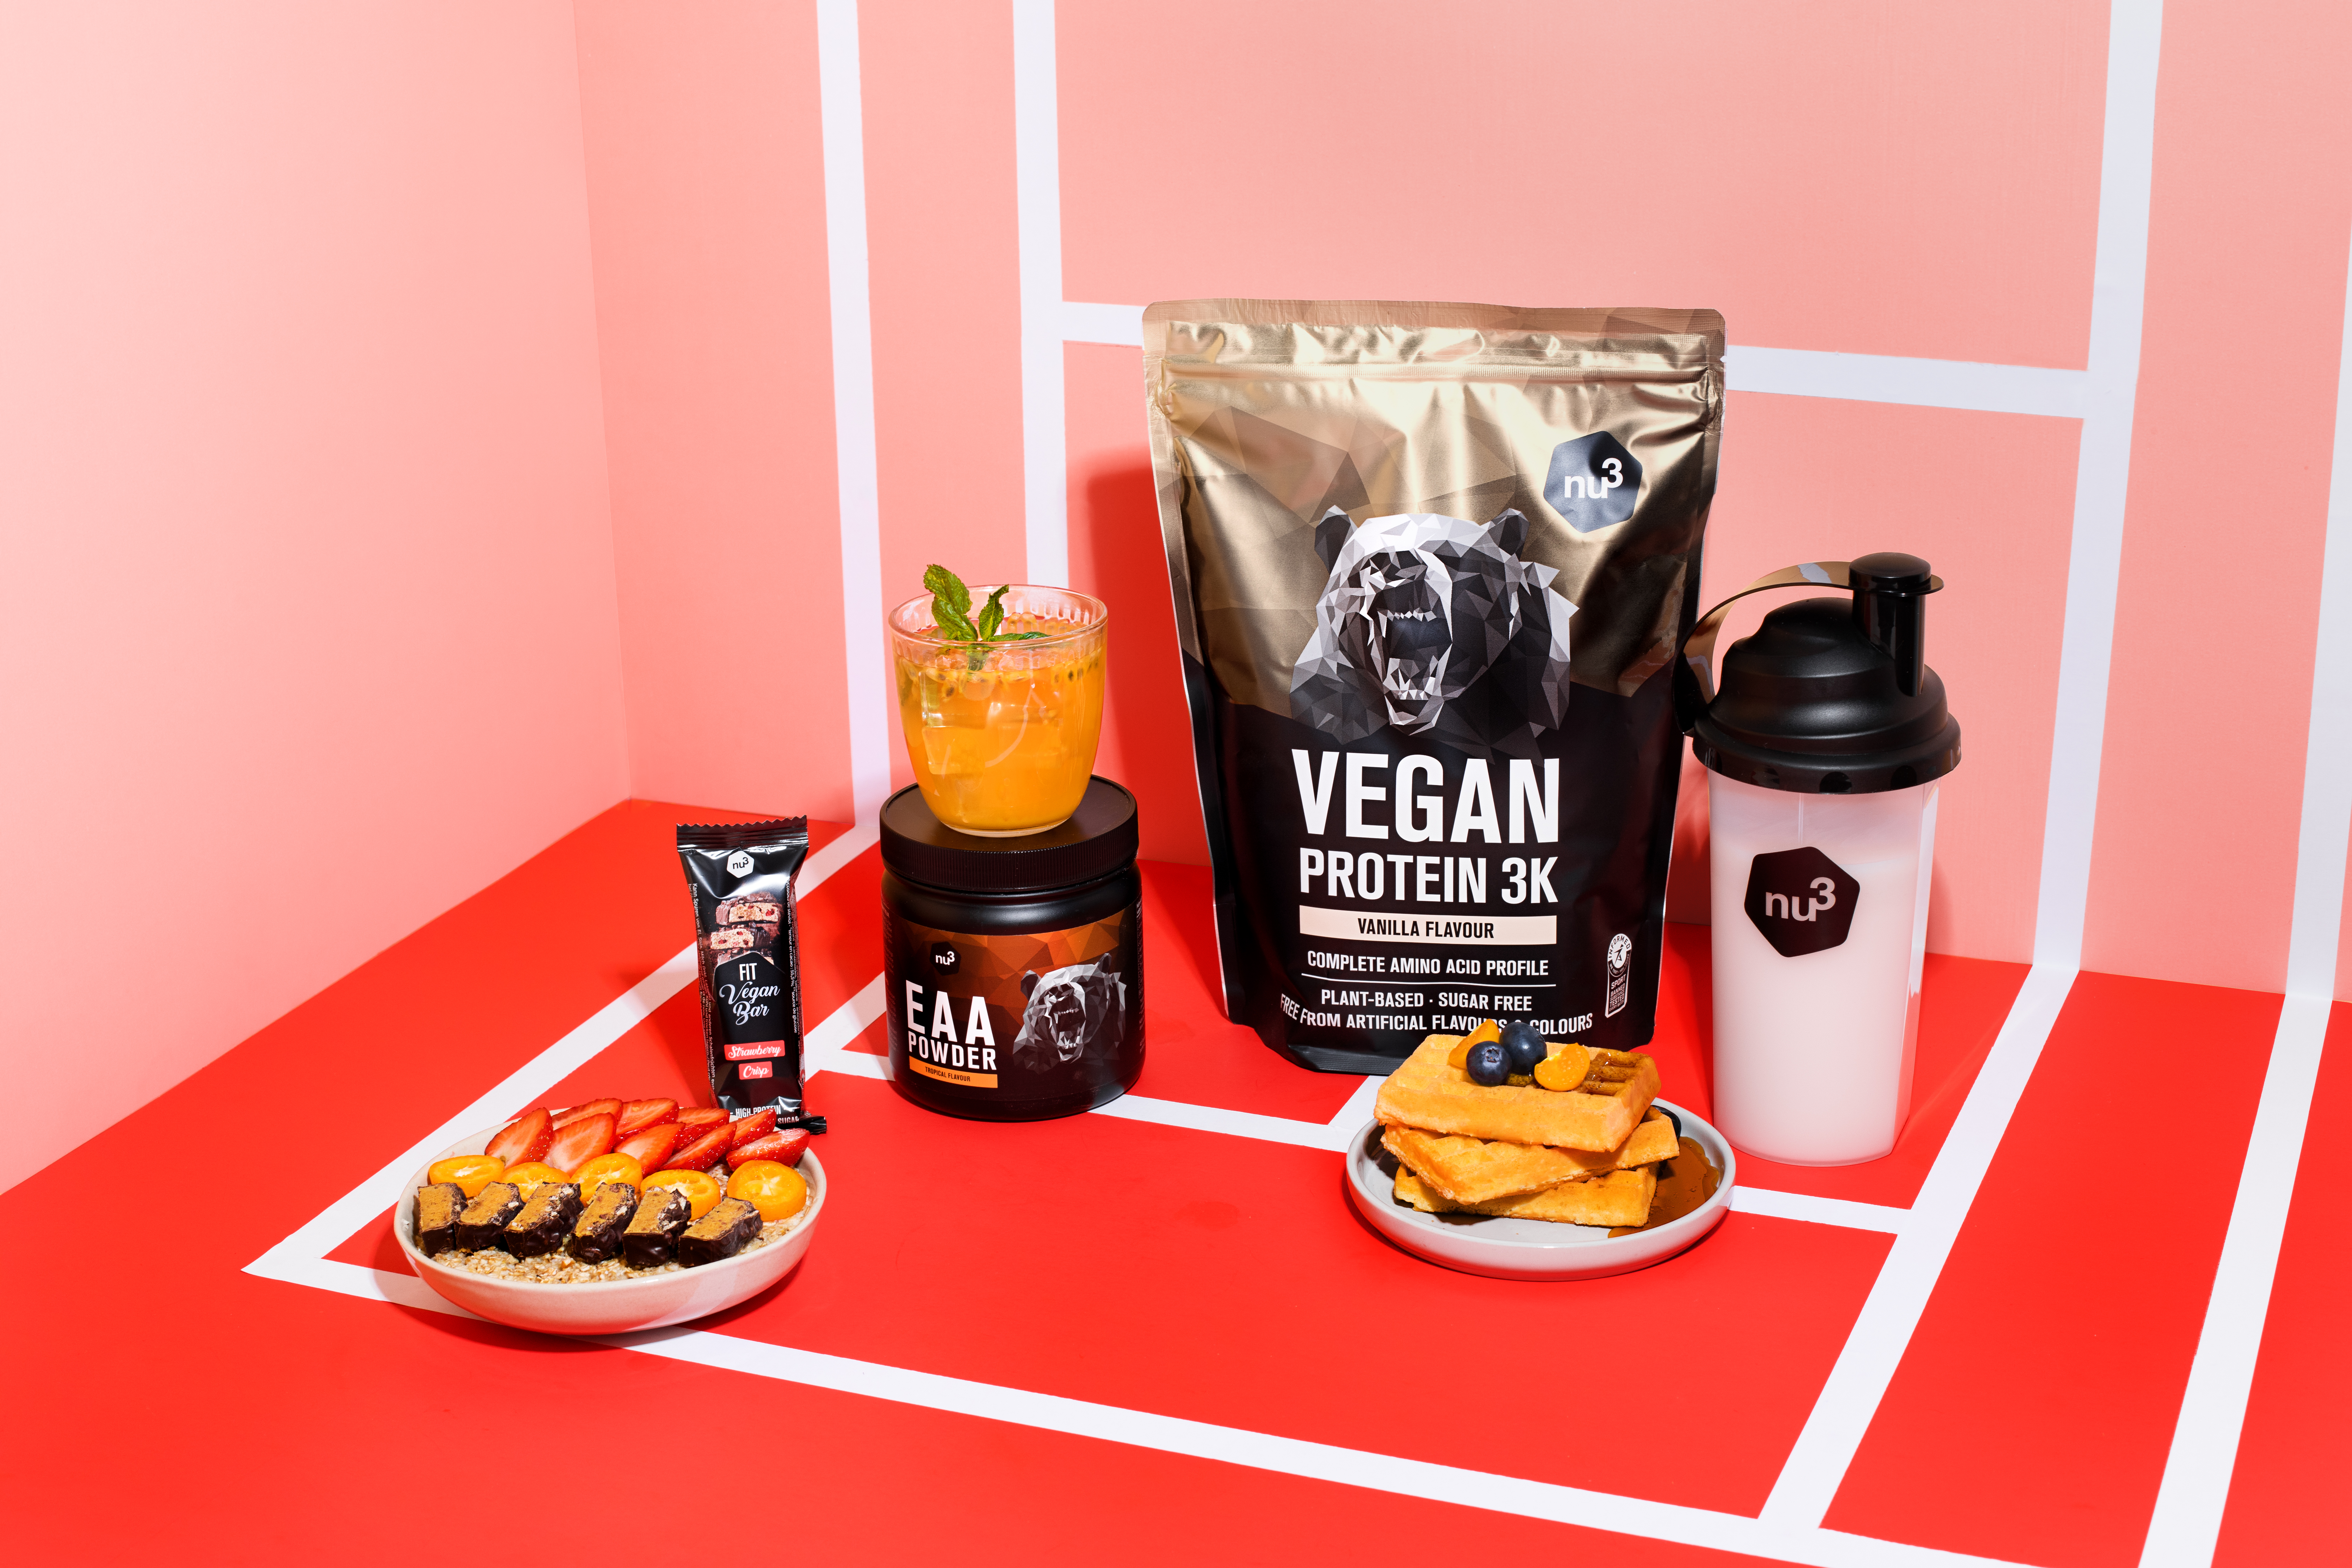 nu3 Vegan Protein Starter Pack